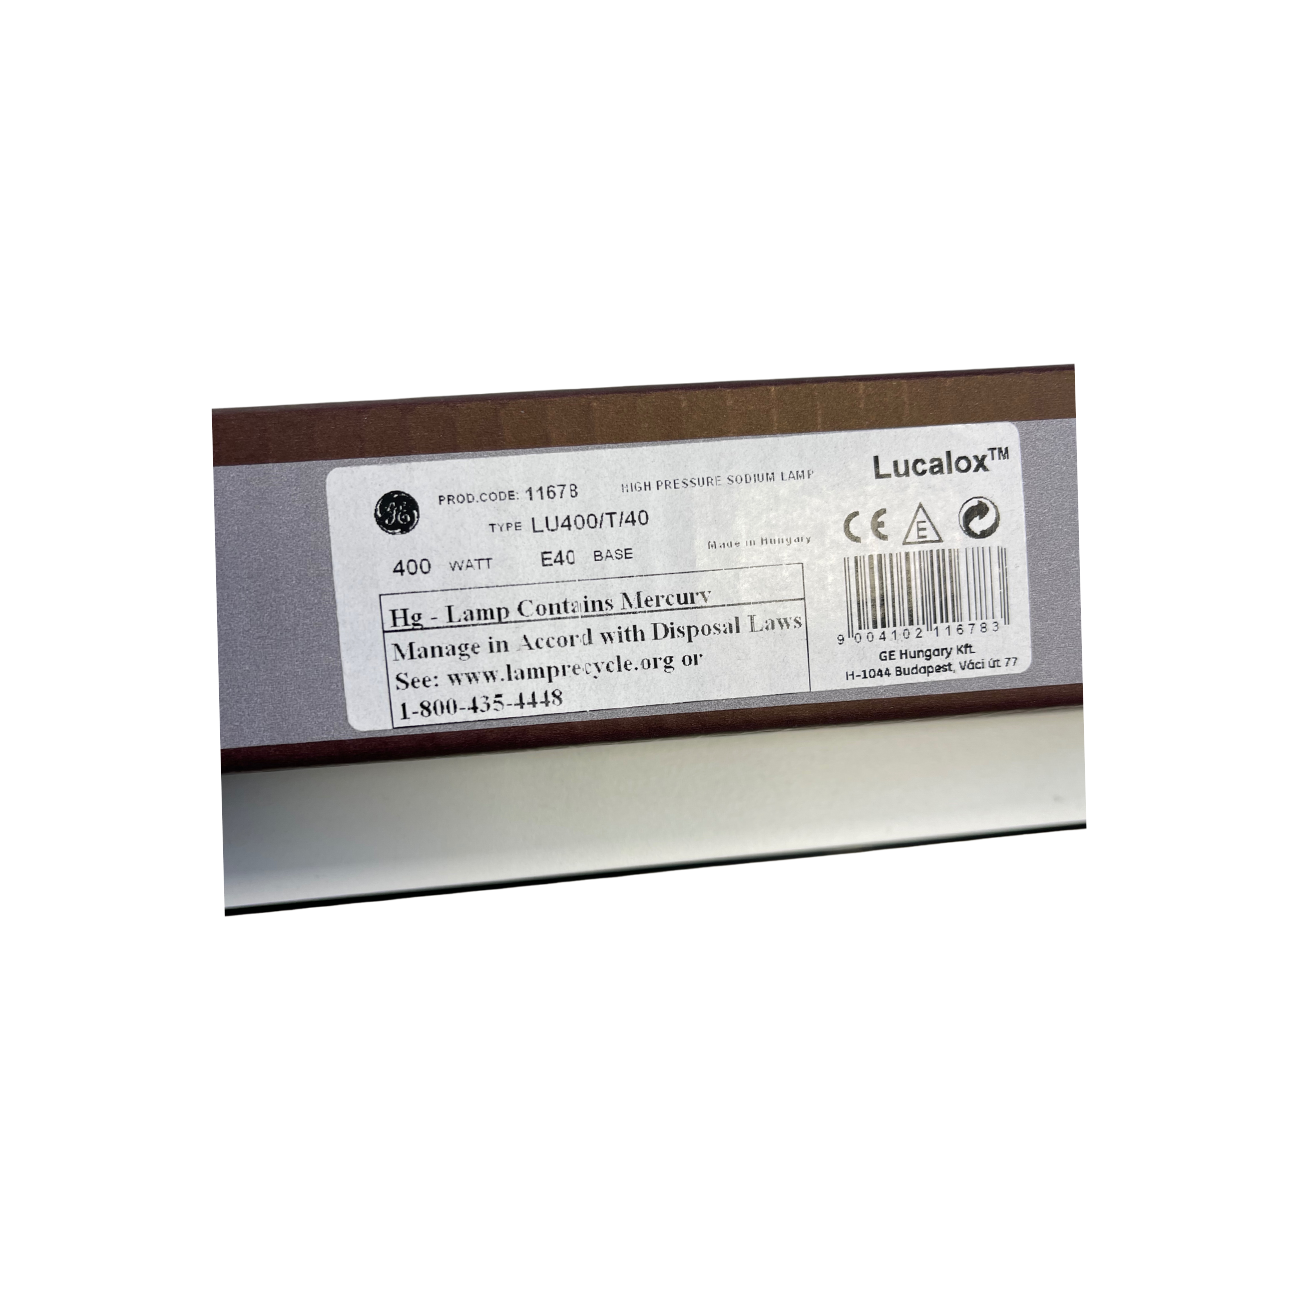 GE Lighting Lucalox LU400/T/40 Natriumdampf-Hochdrucklampe